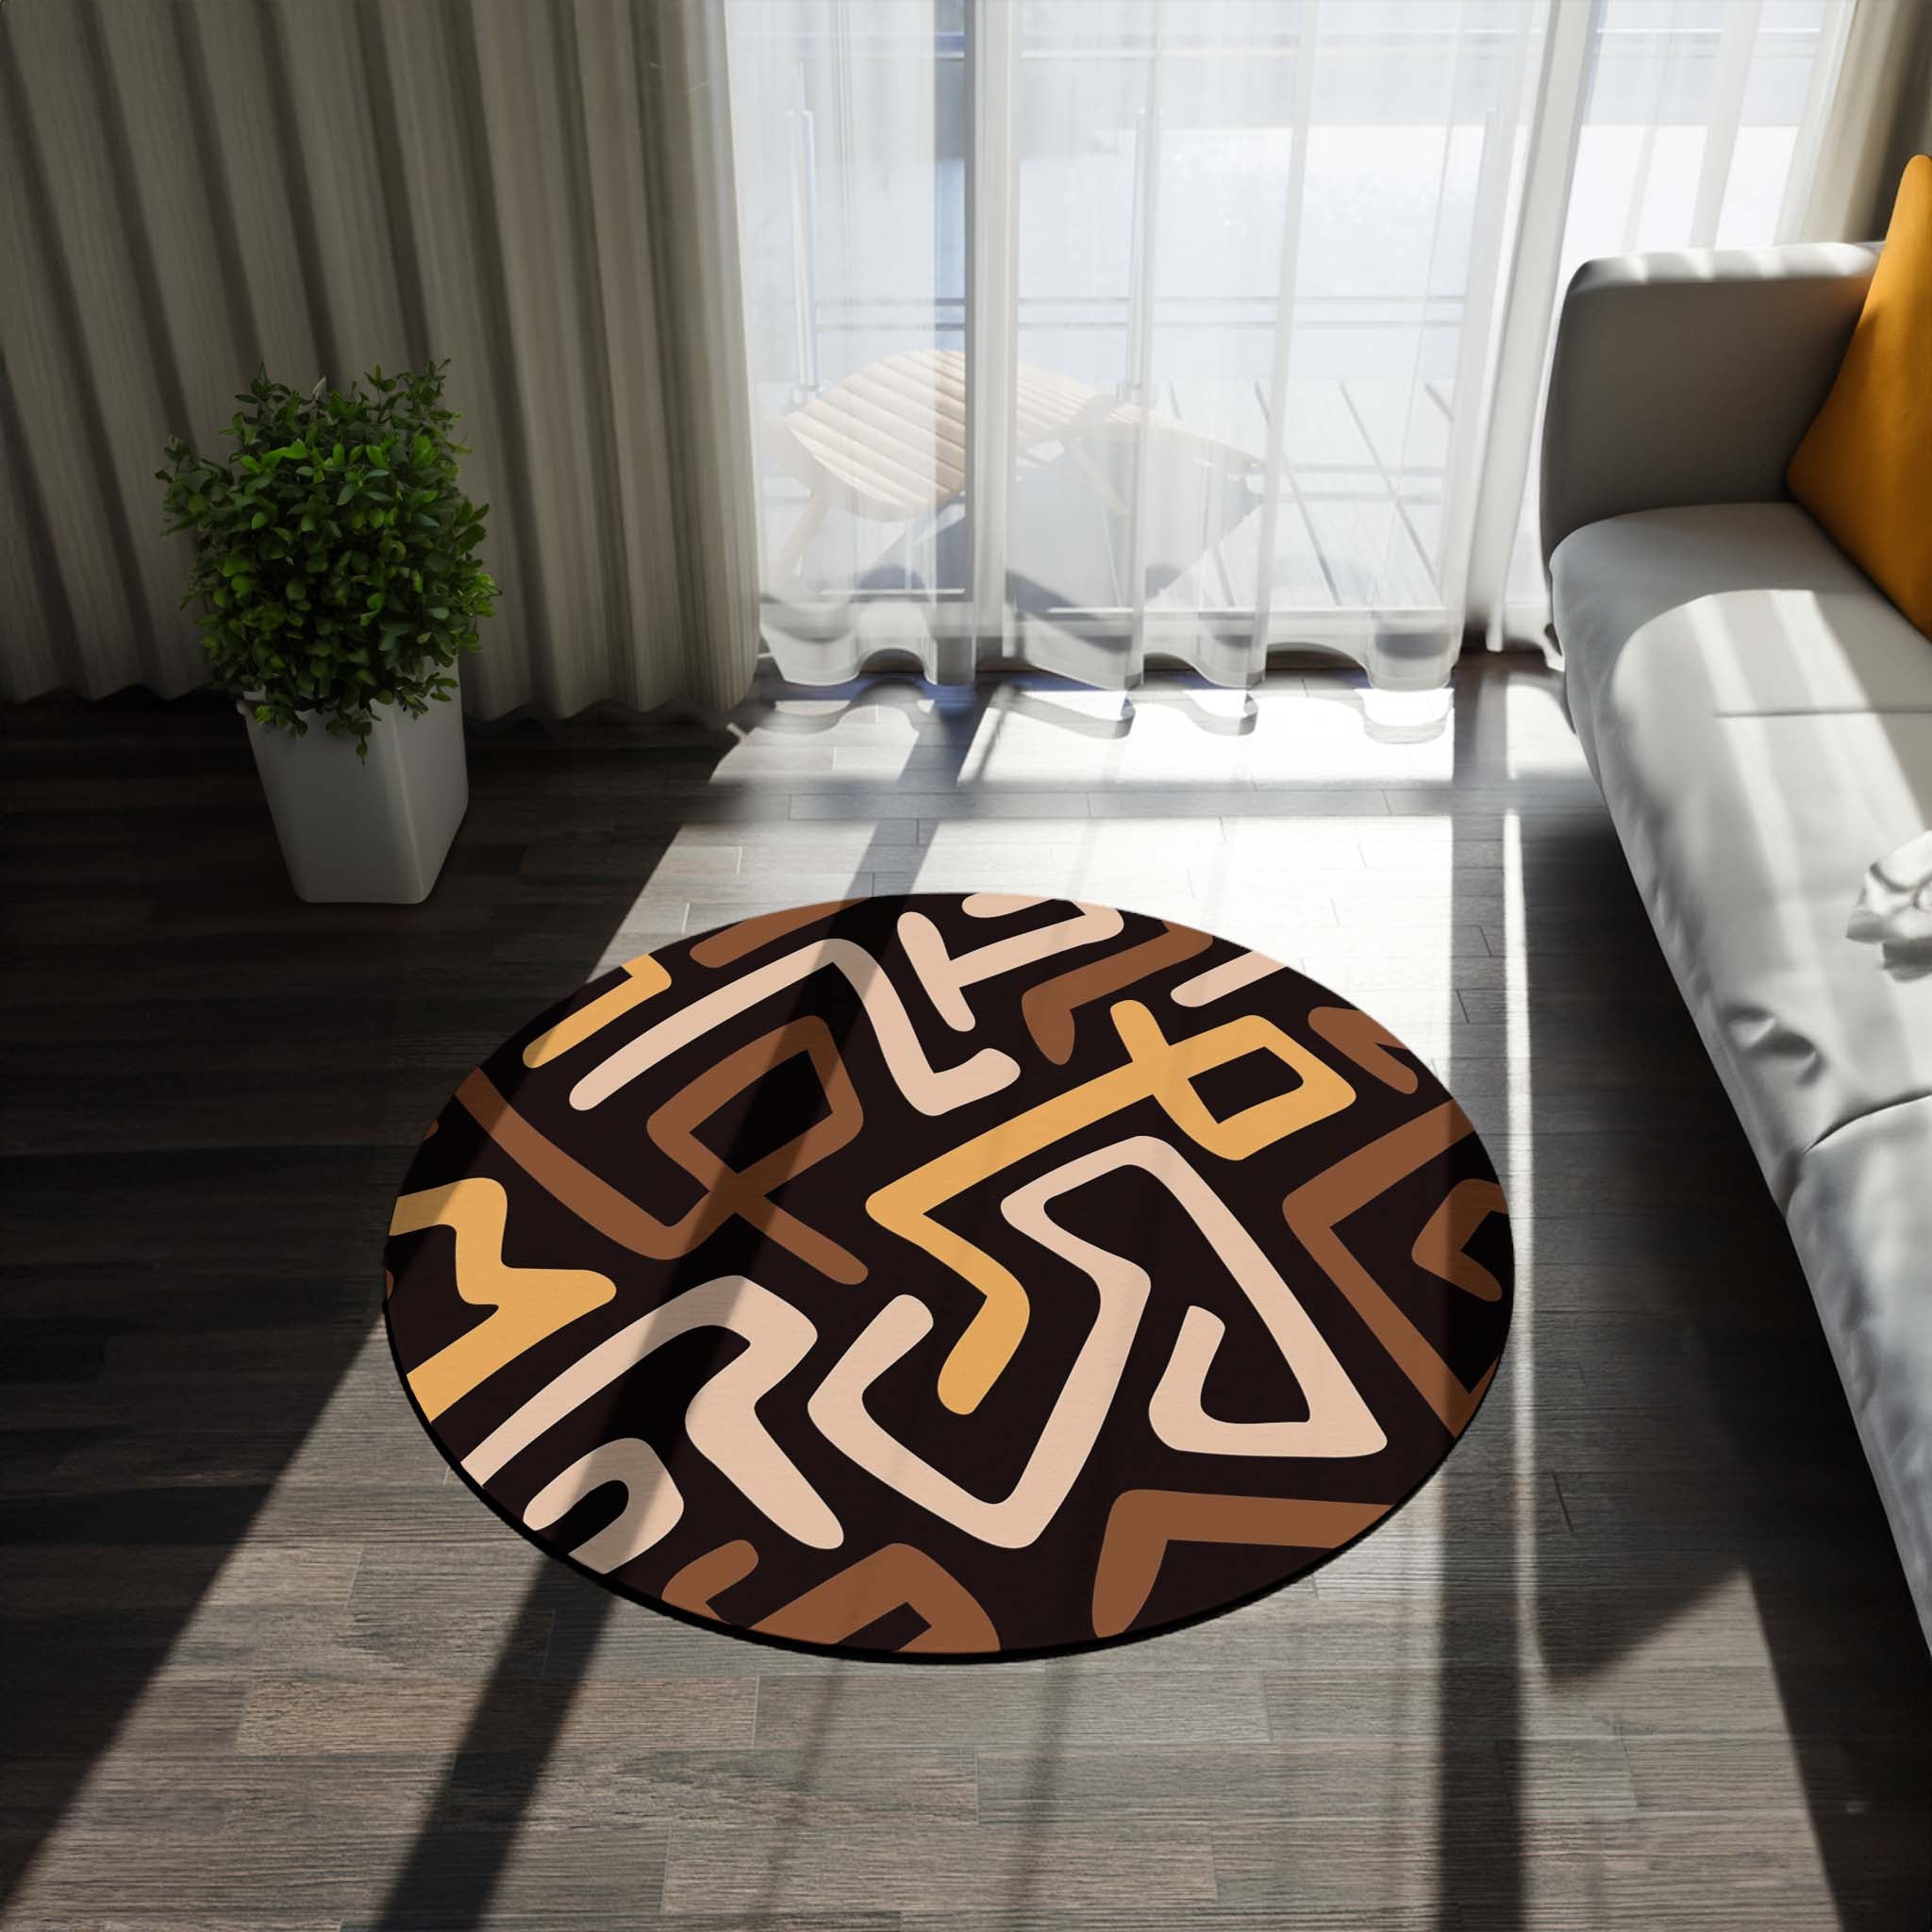 Round African Rugs in Kuba Print Indoor Carpet - Bynelo